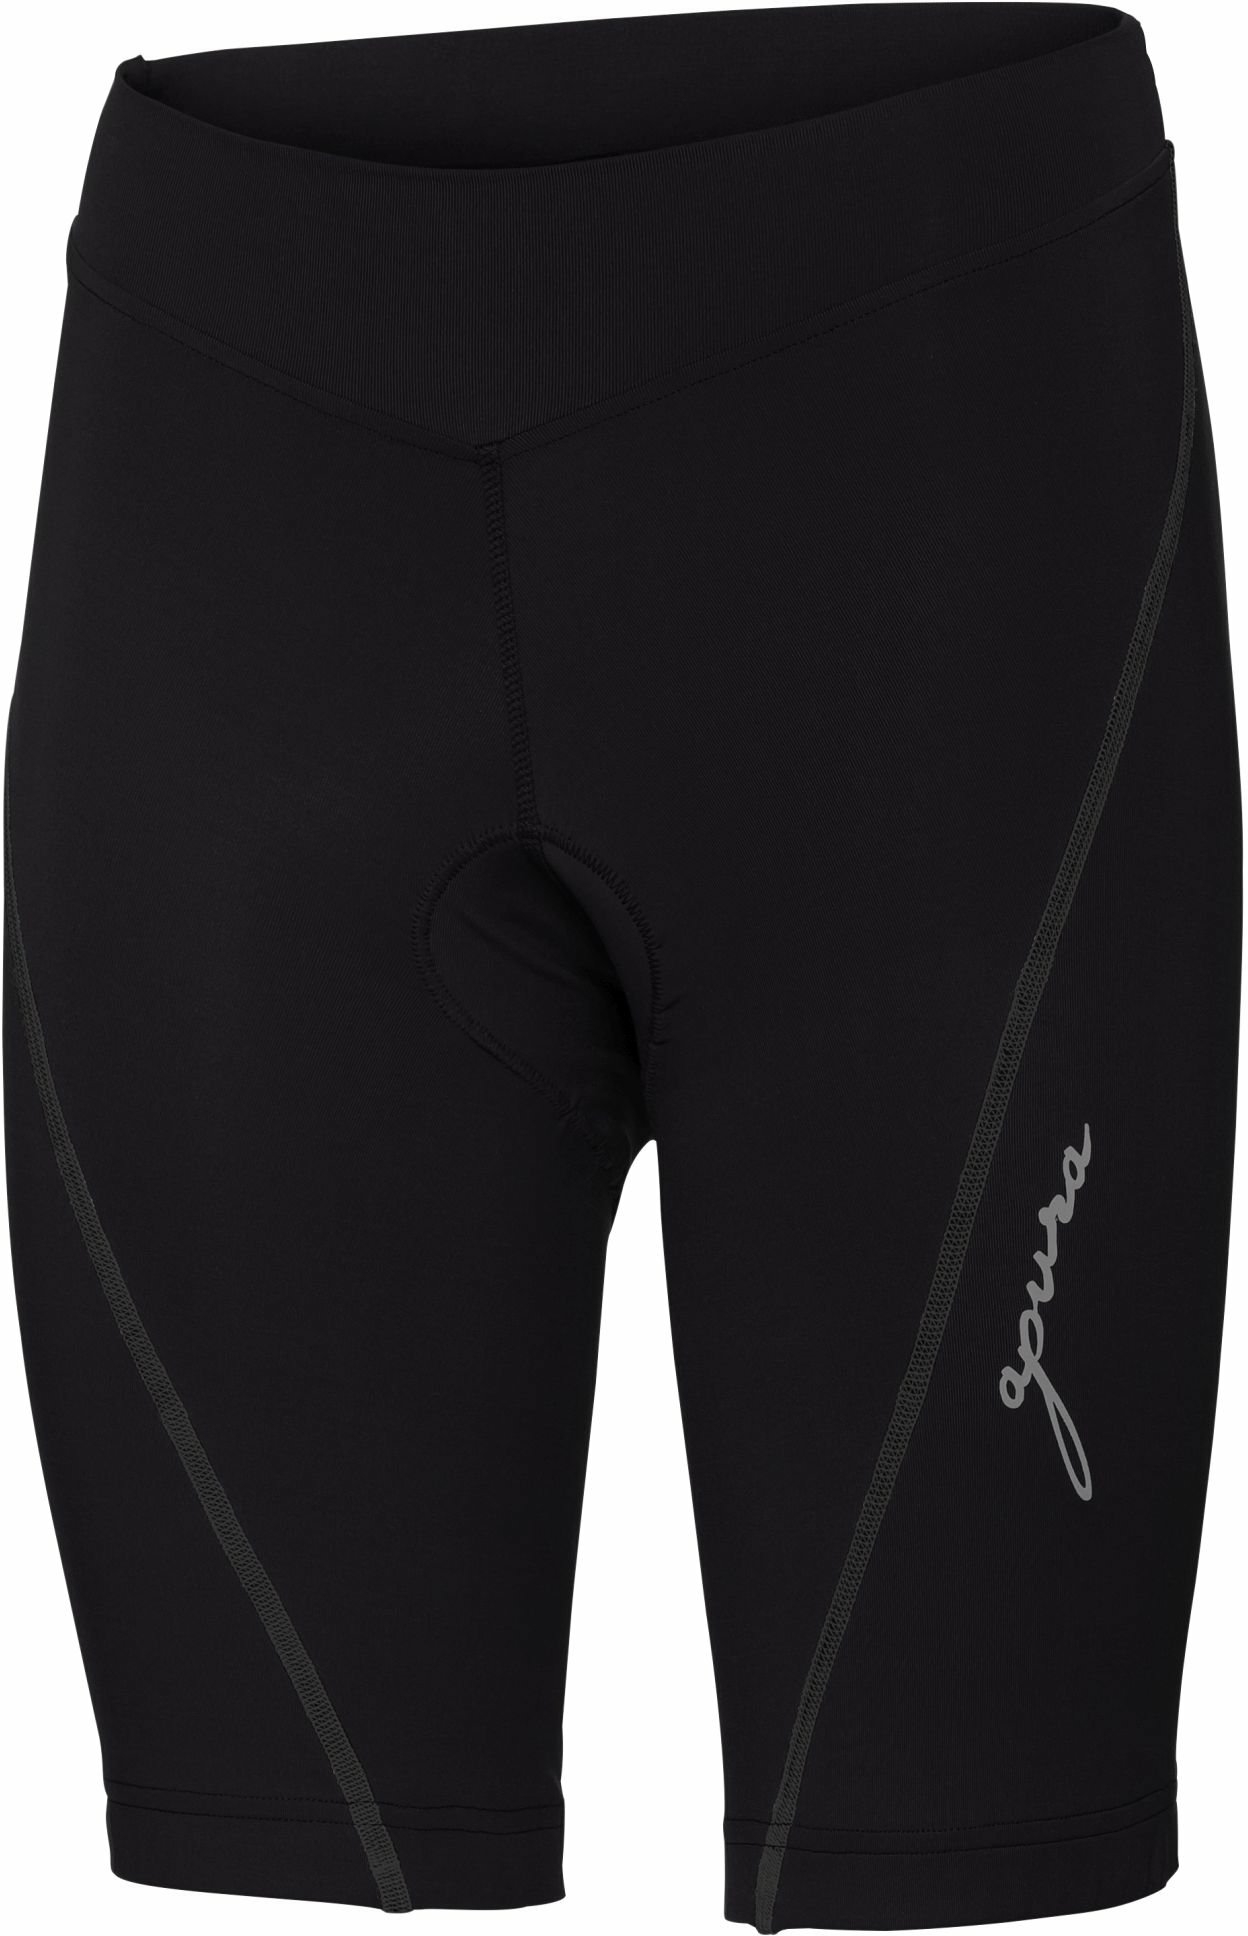 Bekleidung/Hosen: Apura  Damen Shorts Basic Short 3.0 M 